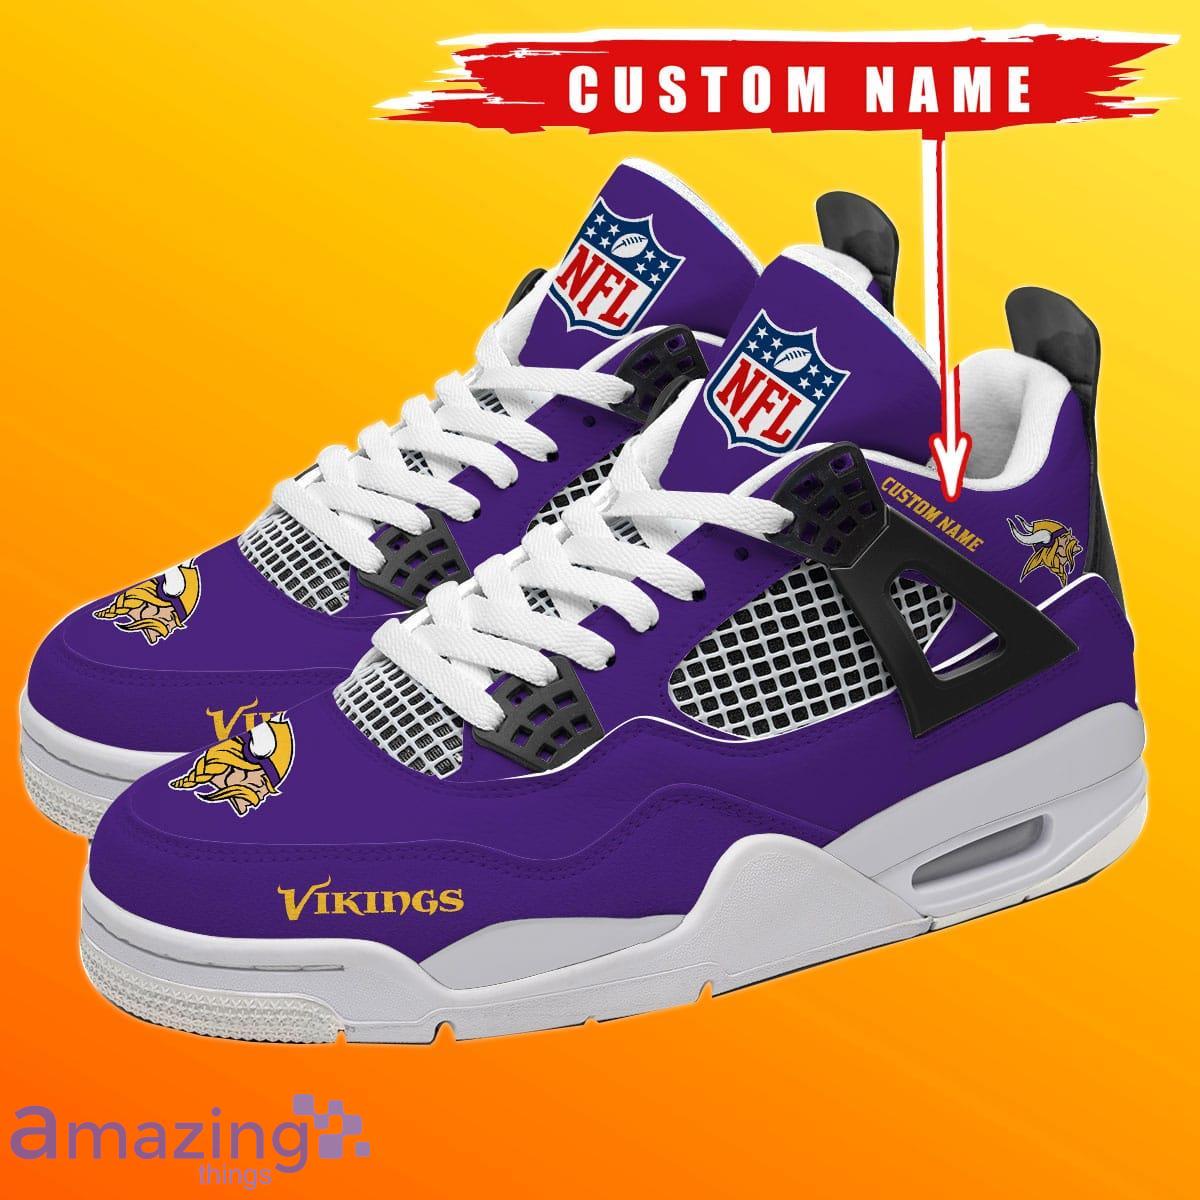 Minnesota Vikings NFL Air Jordan 4 Custom Name Shoes